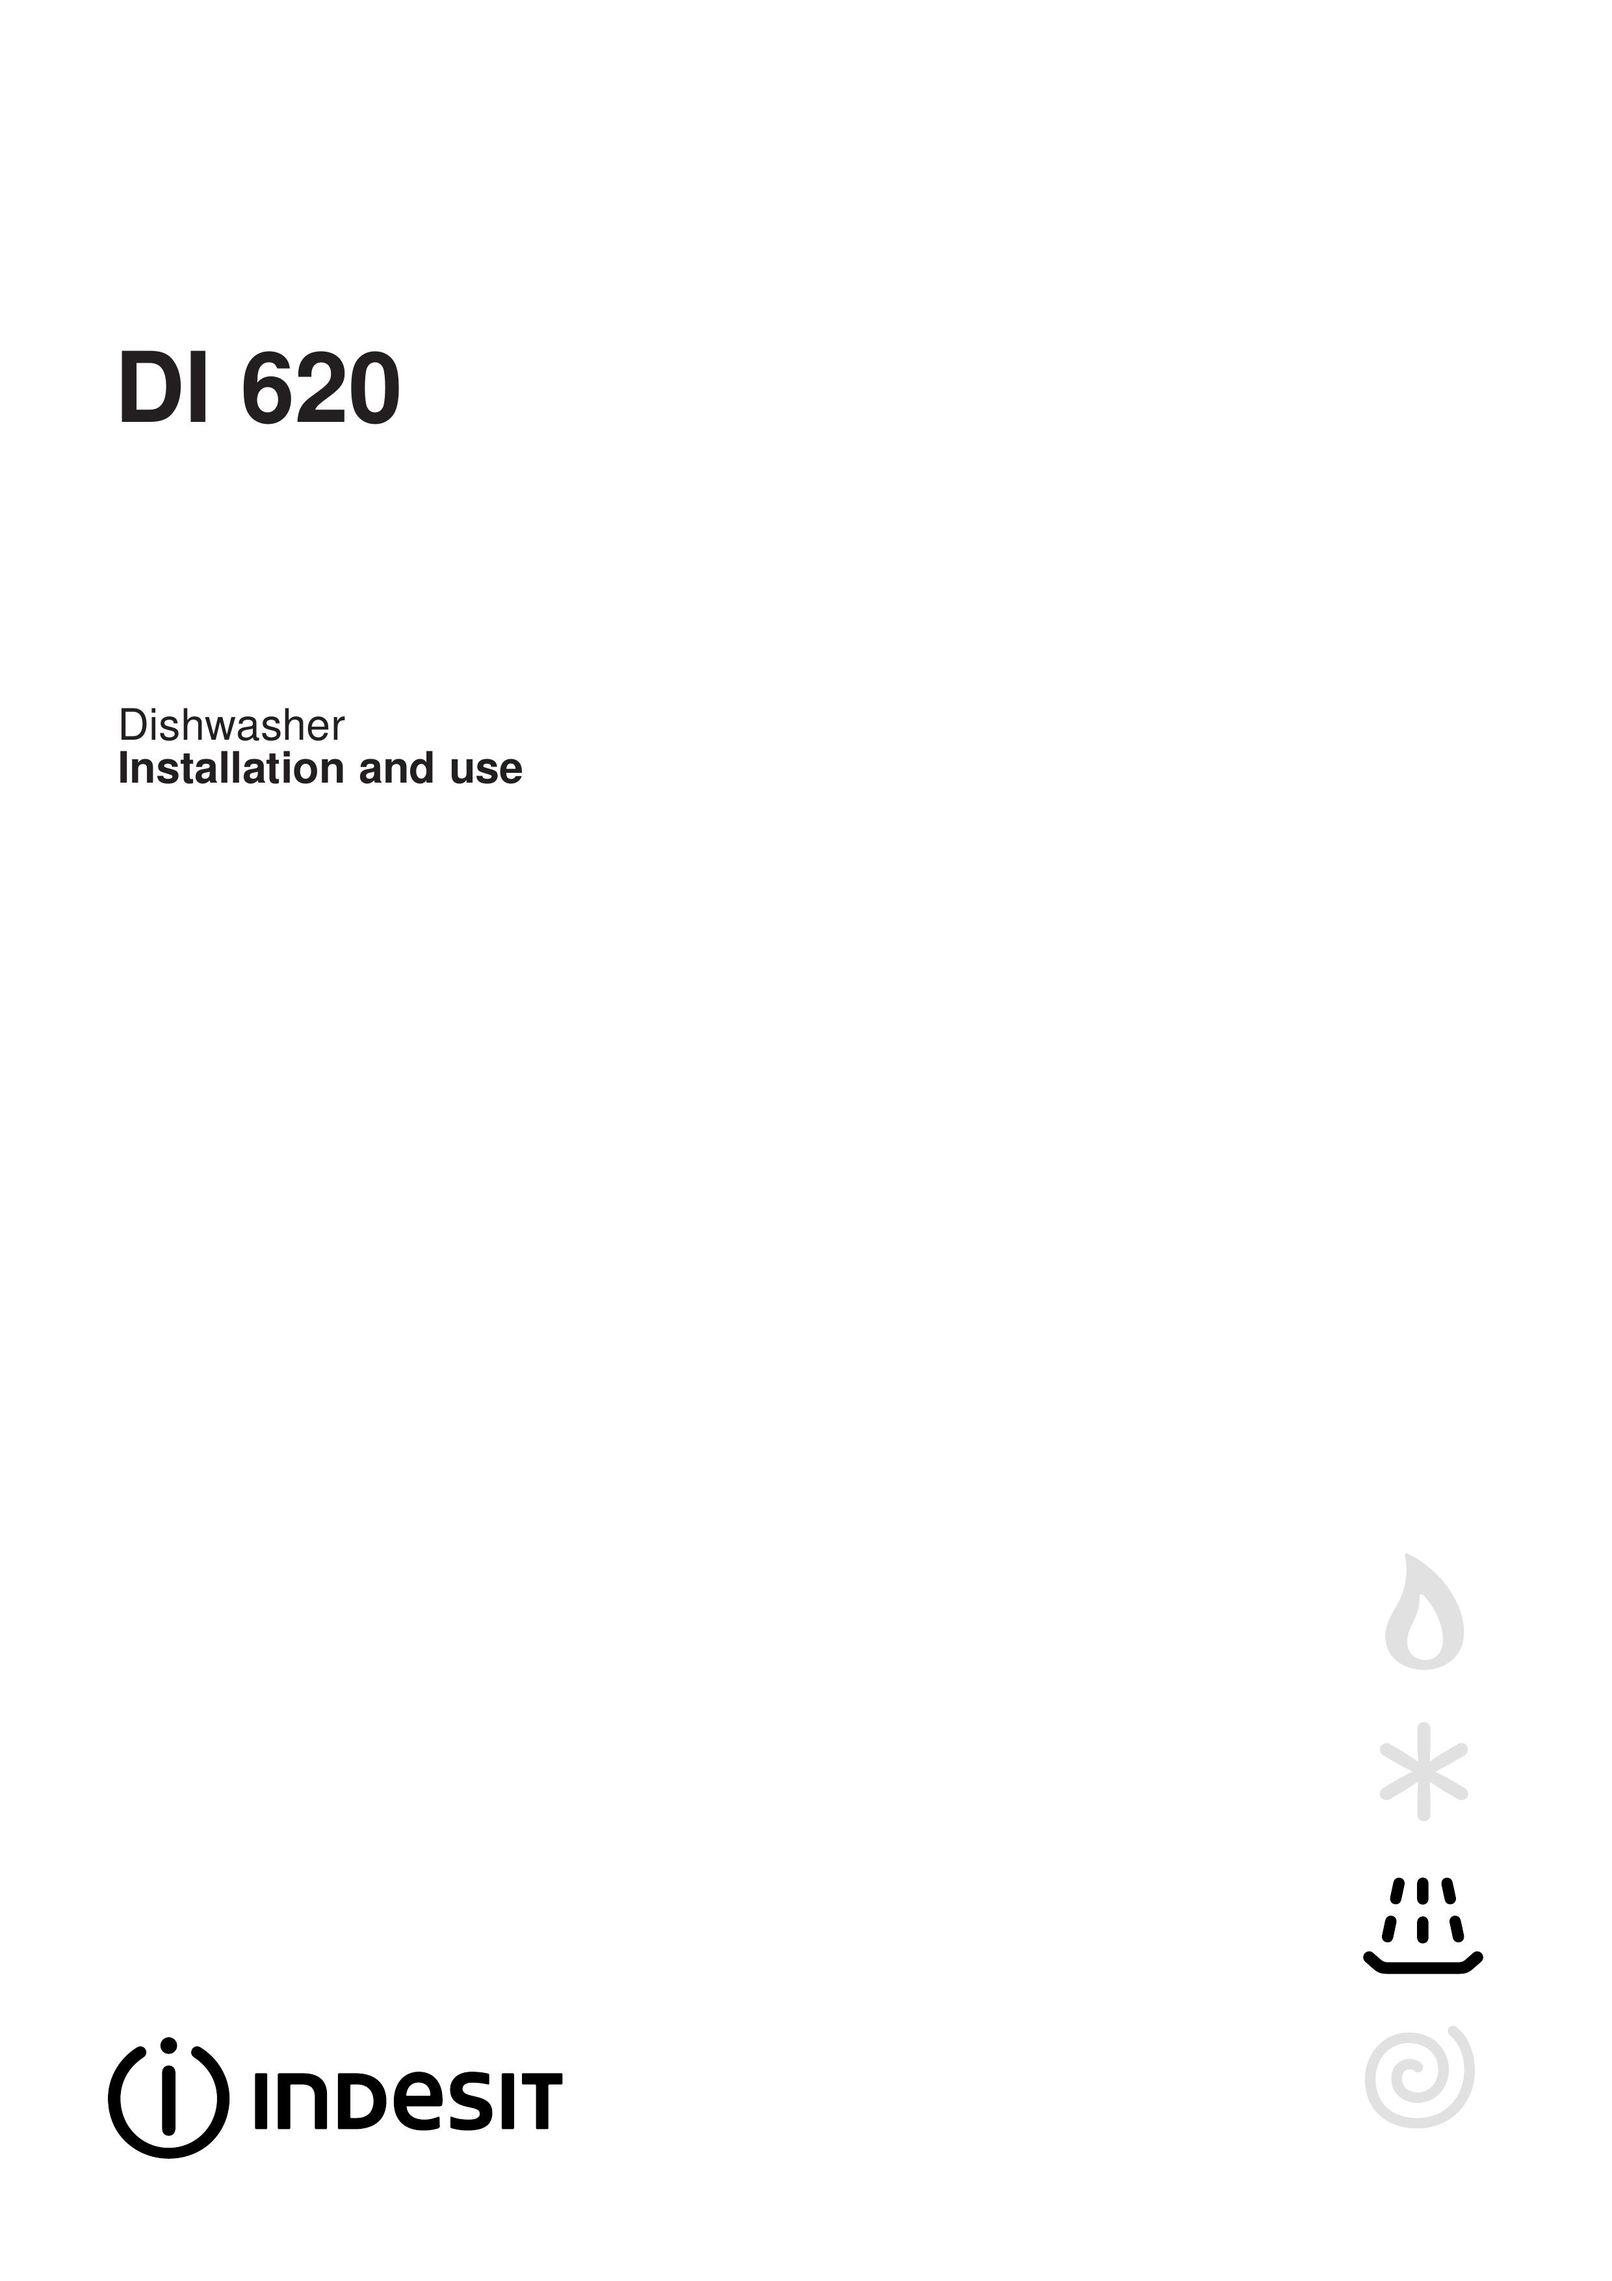 Indesit DI 620 Dishwasher User Manual